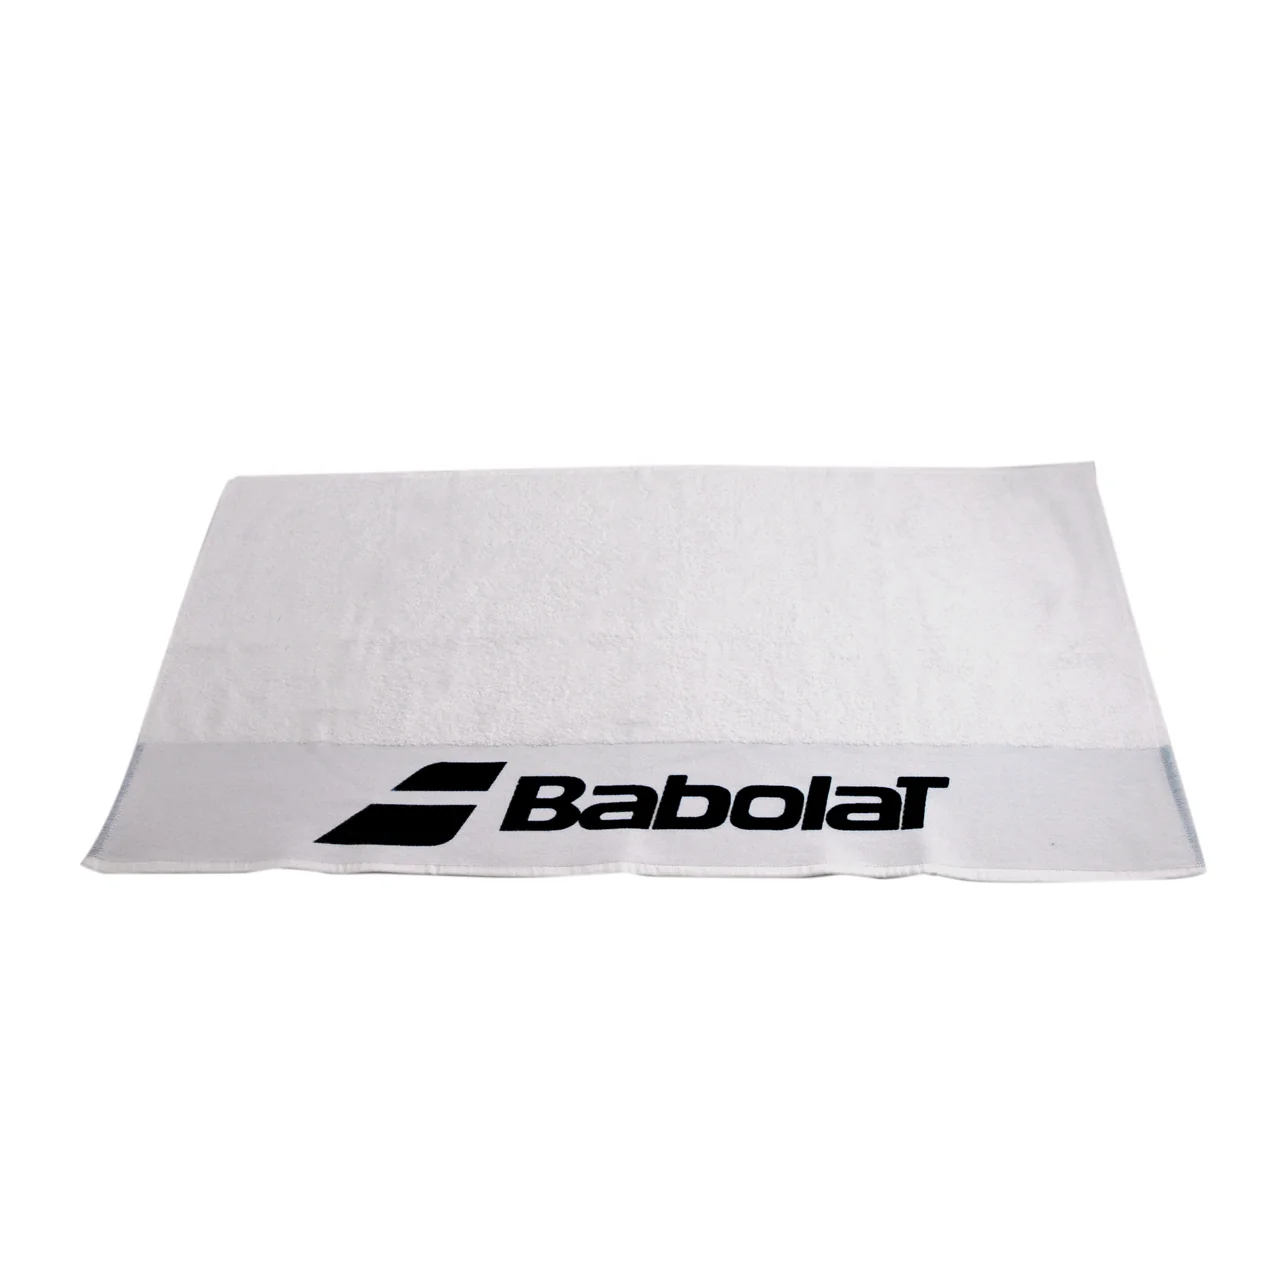 Babolat Handduk 100*50cm